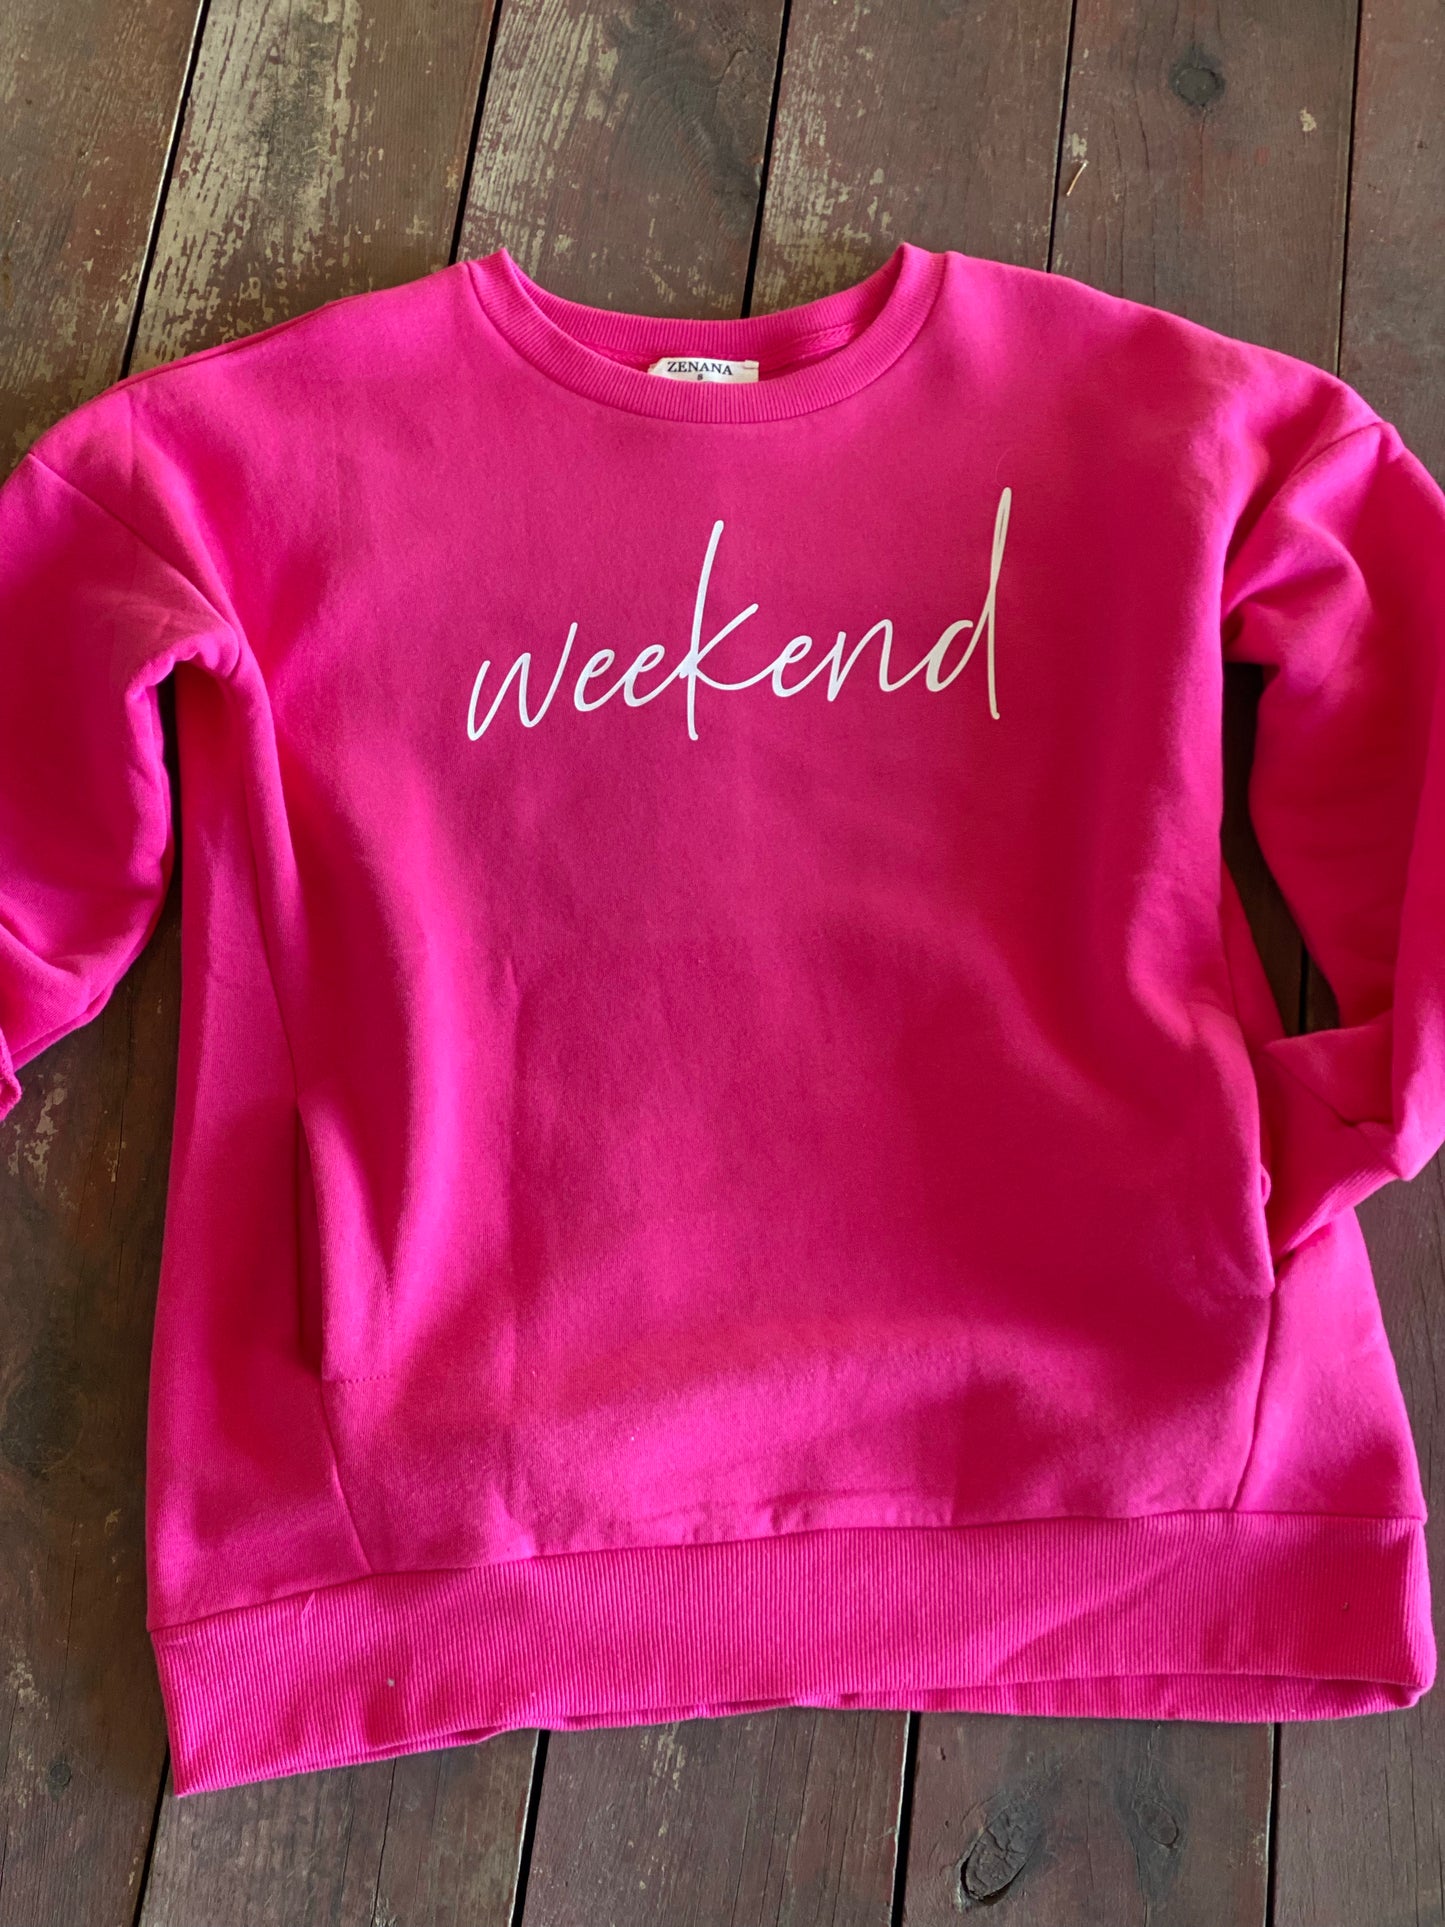 Weekend sweatshirt